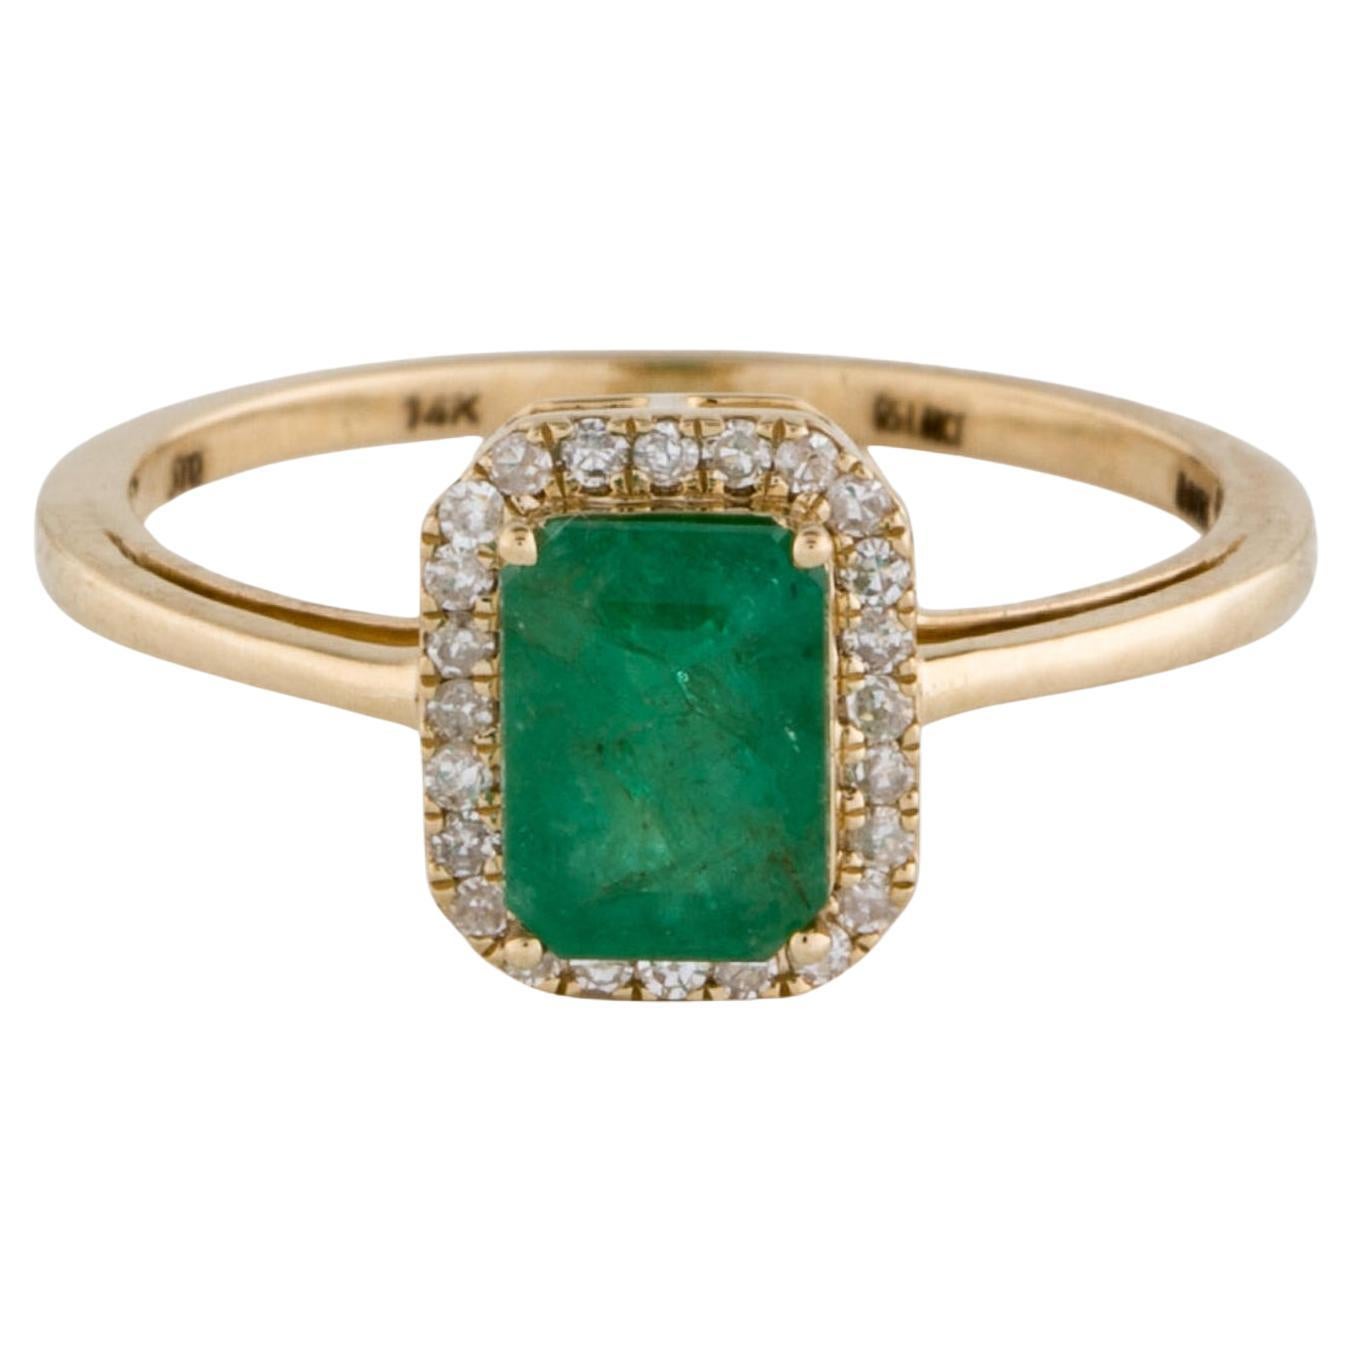 Exquisite 14K 1.00ct Emerald & Diamond Ring - Size 7 - Elegant Statement Jewelry